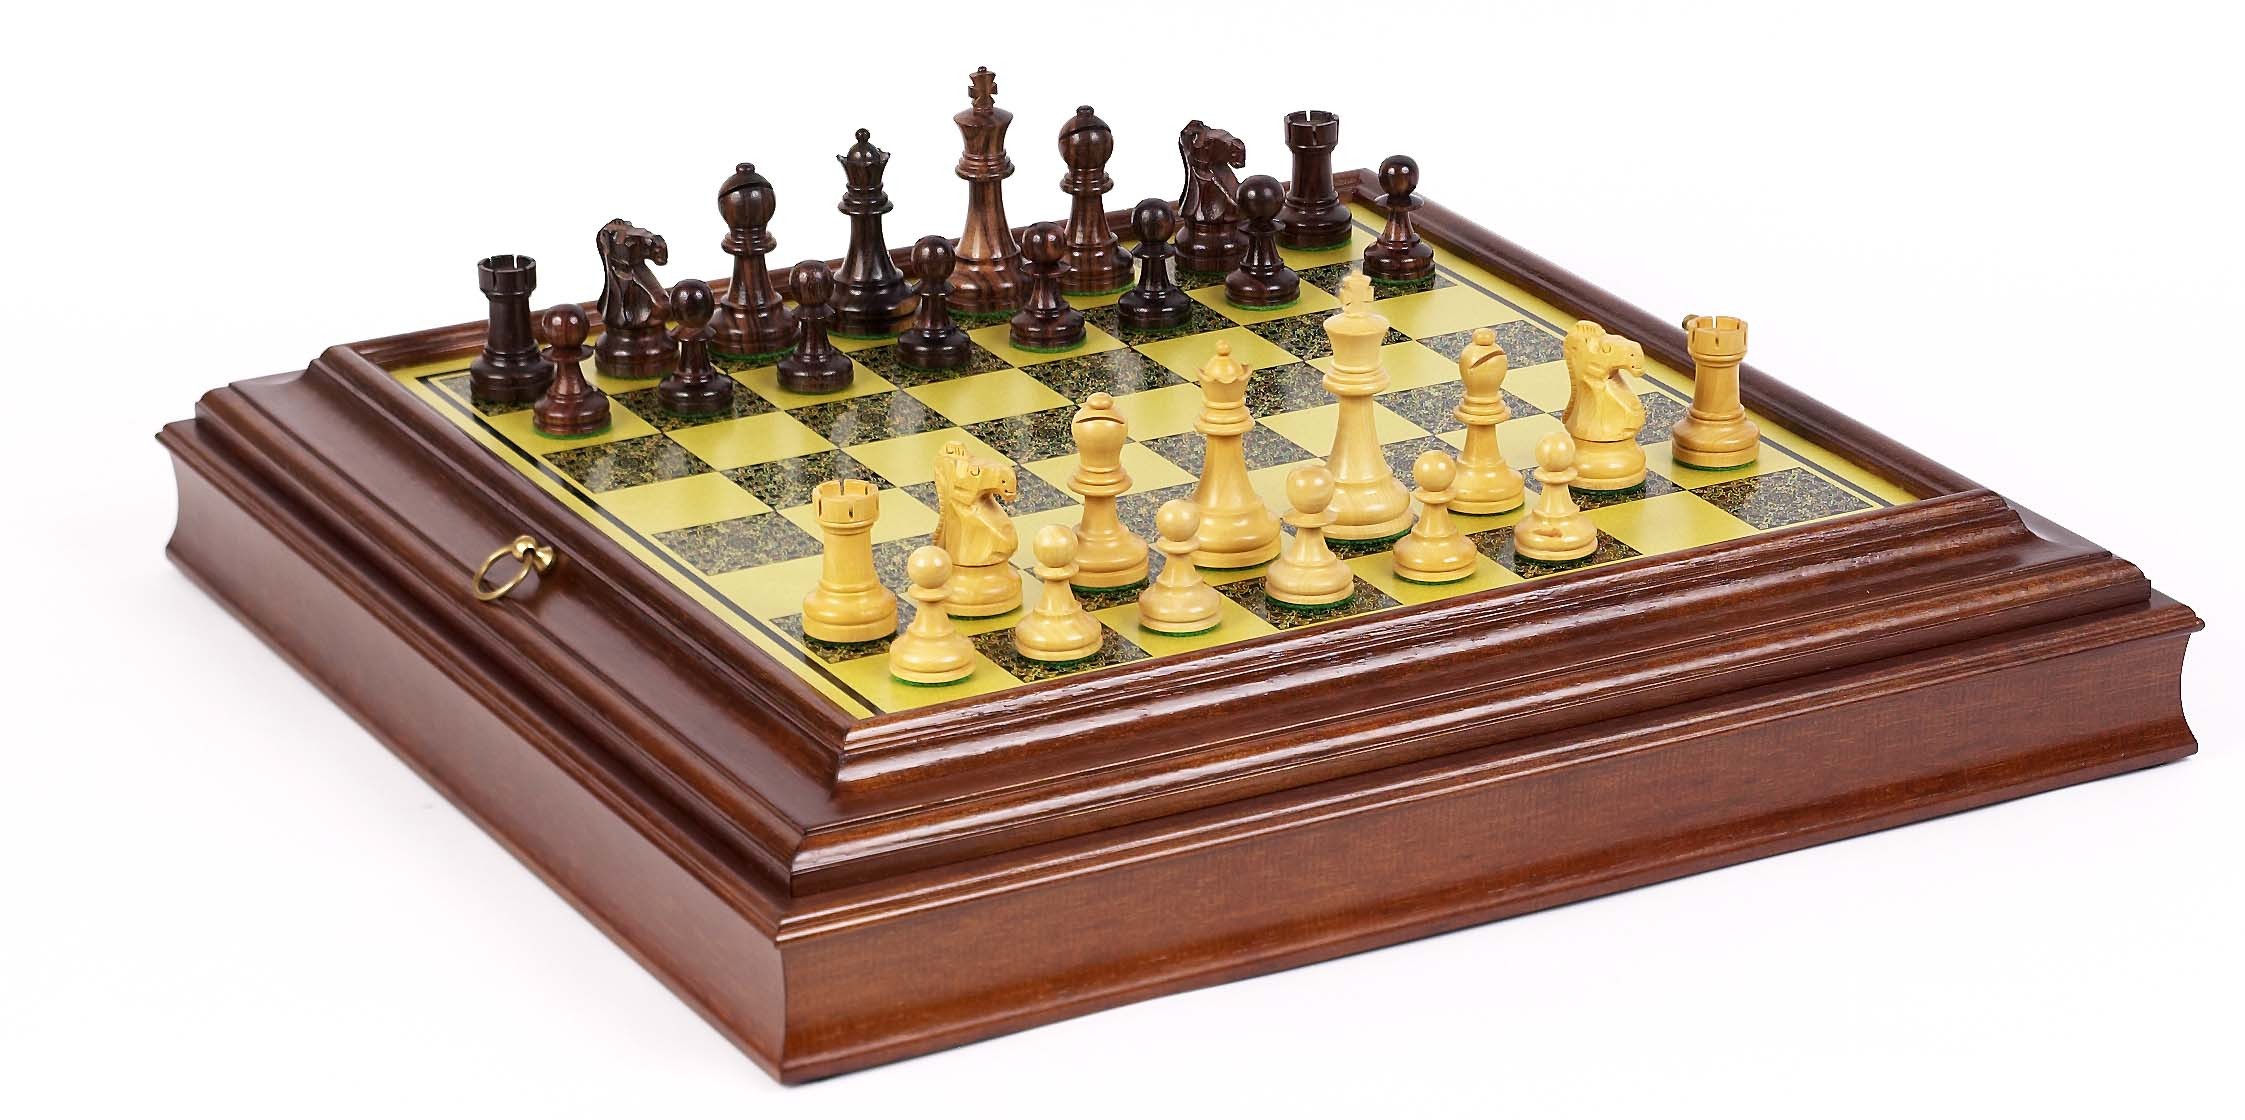 French Staunton Chessmen & Cabinet Board